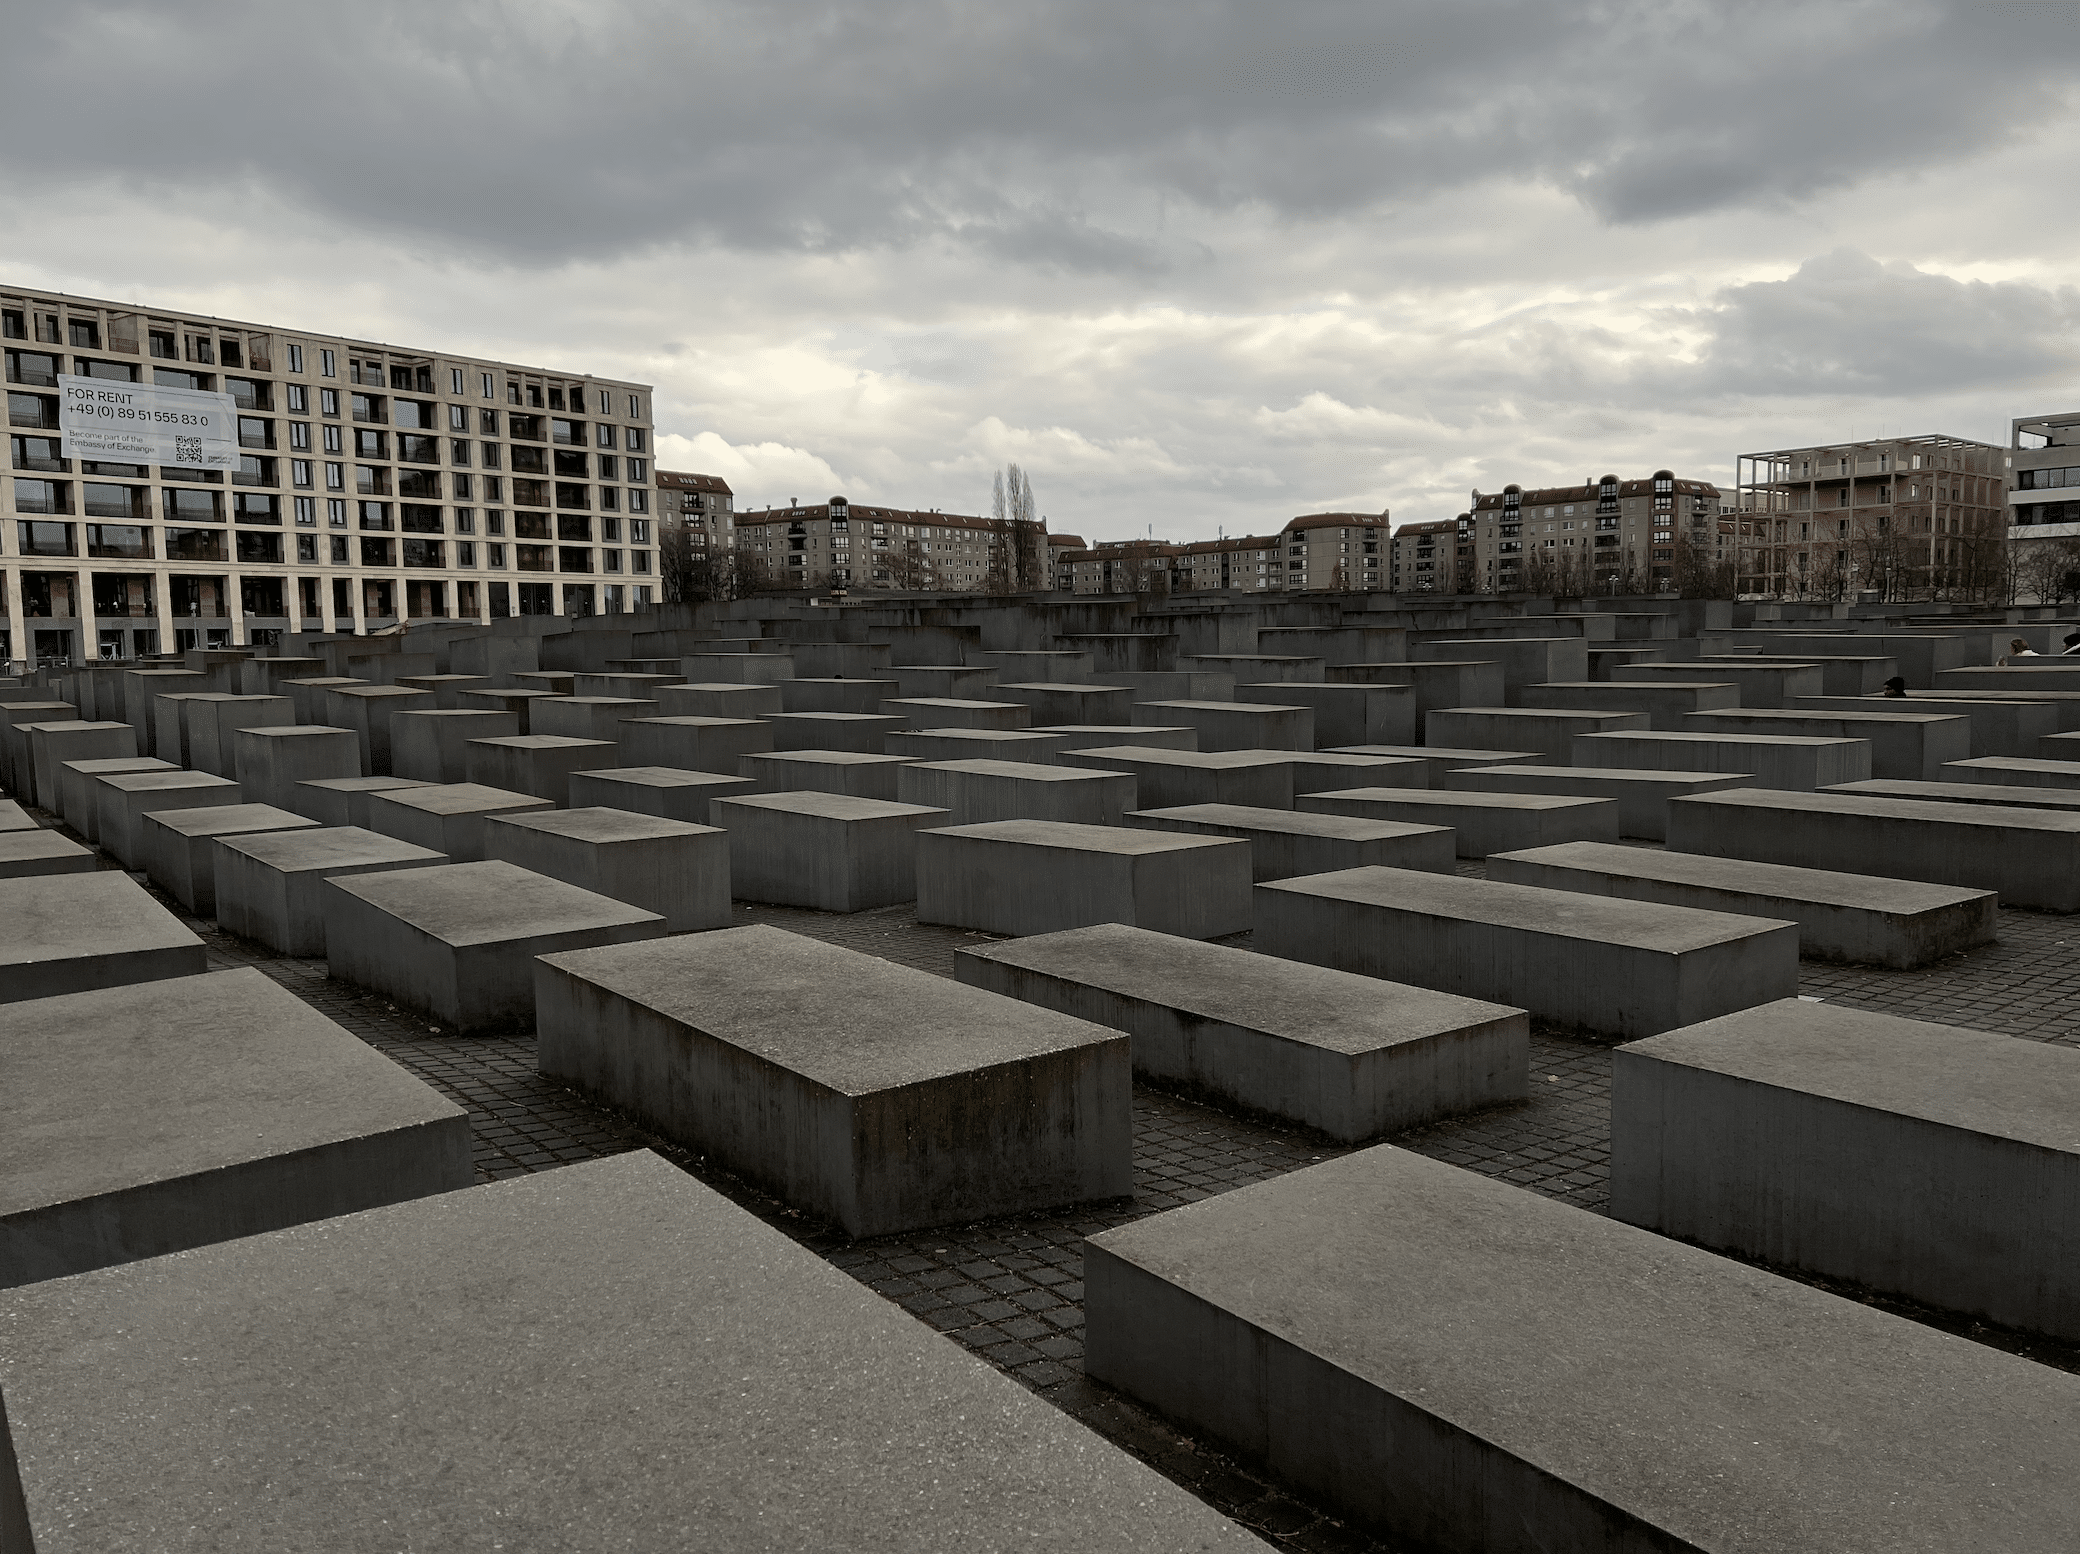 visiter berlin : decouvrir le memorial de l holocauste